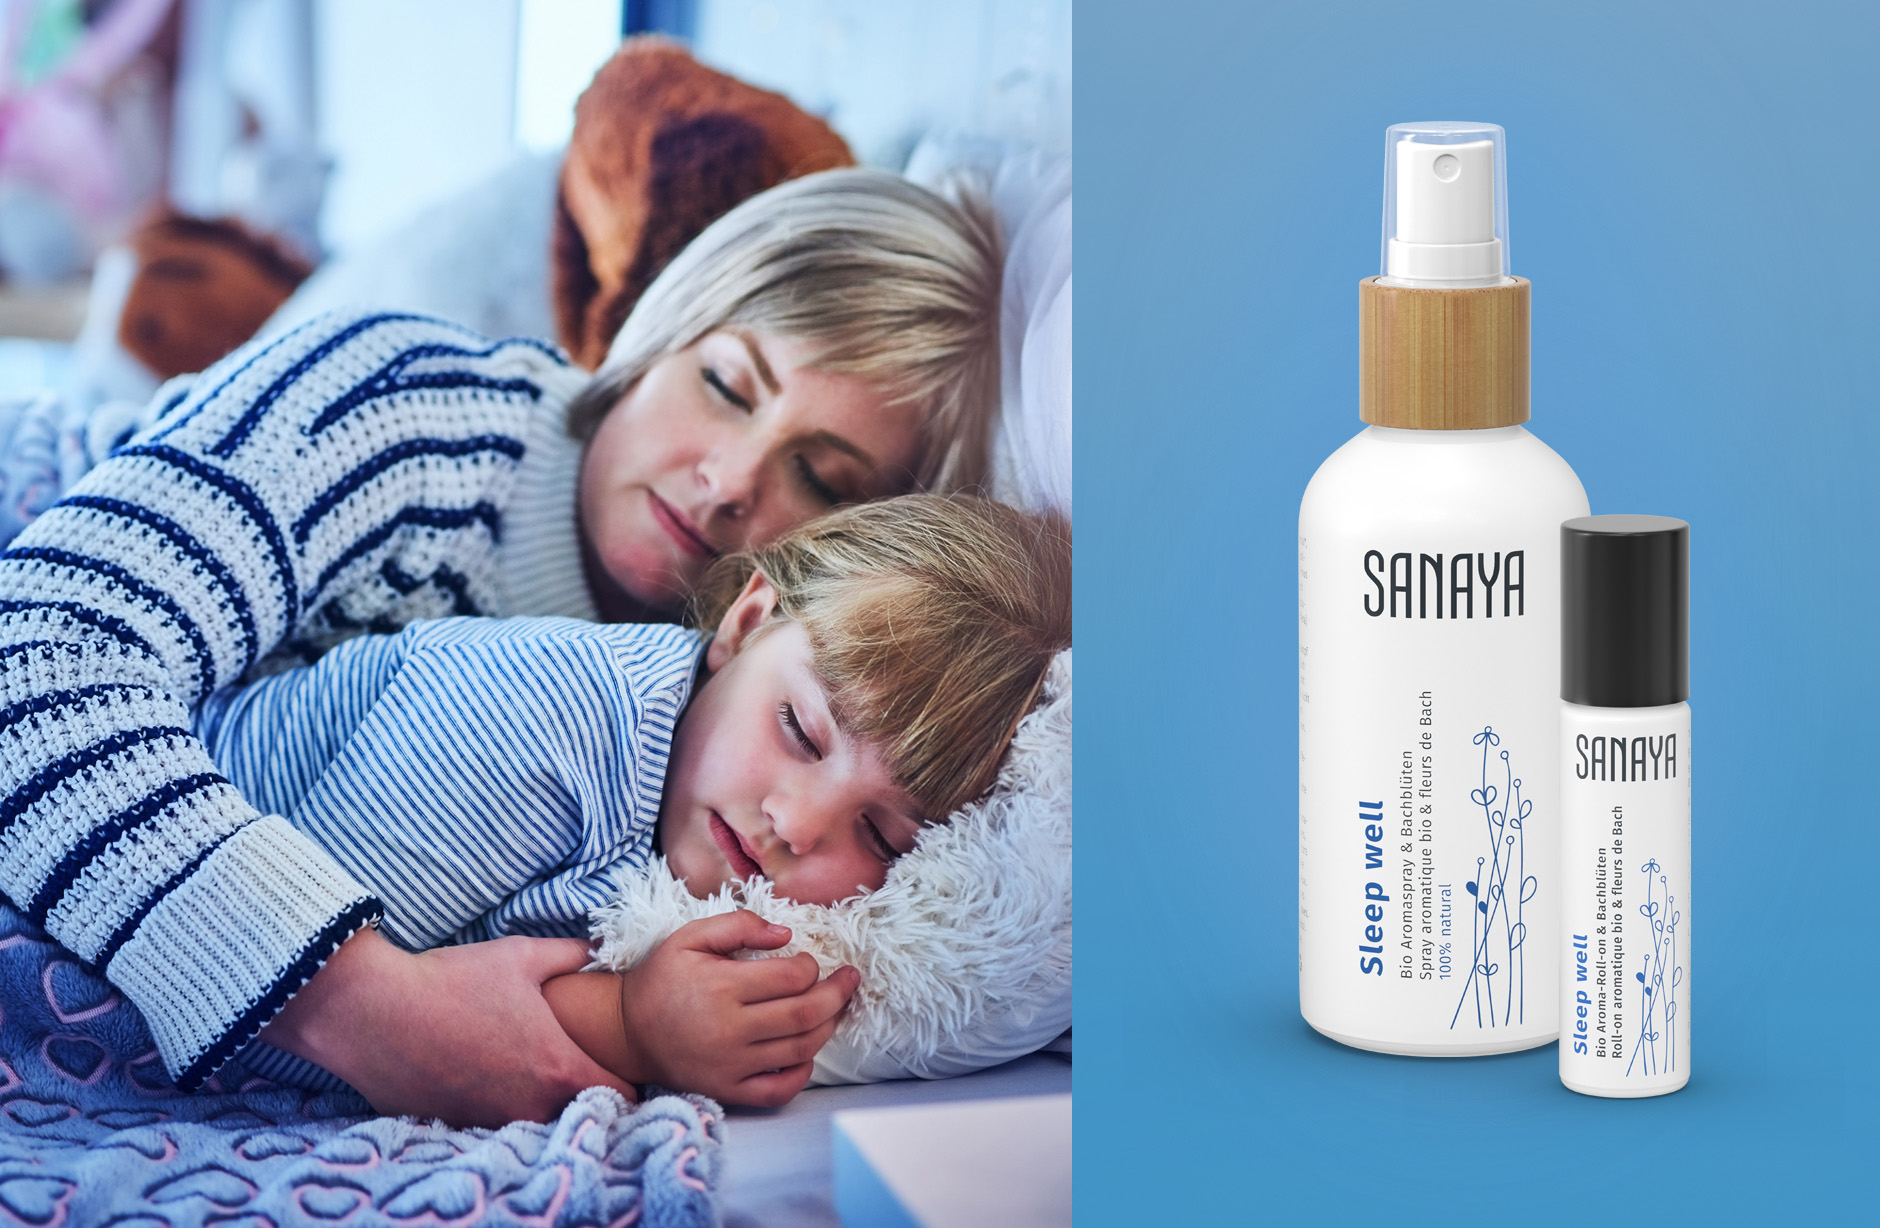 Sanaya Sleep well – Newsign GmbH